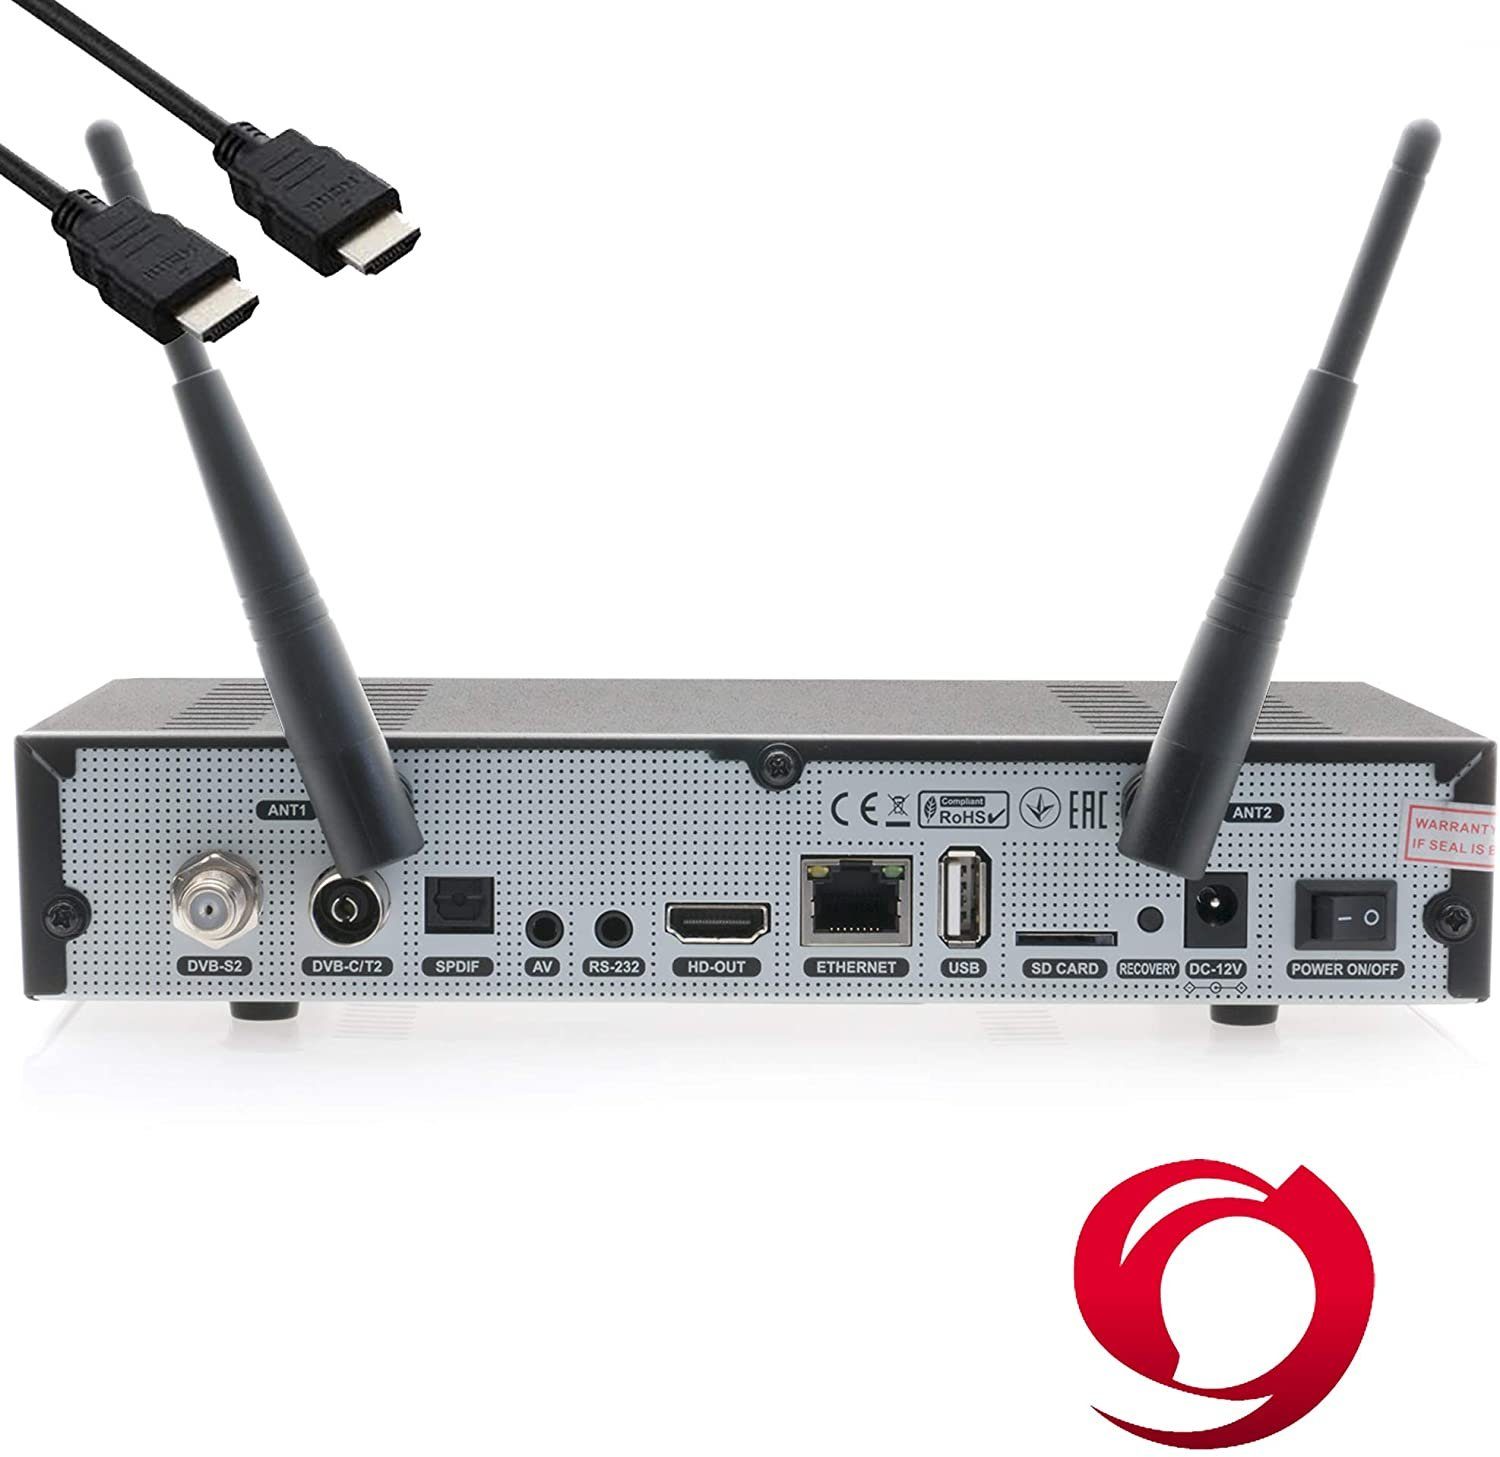 OCTAGON SF8008 HDD 4K UHD DVB-S2X Combo Linux E2 SAT-Receiver Receiver & DVB-C/T2 + 1TB